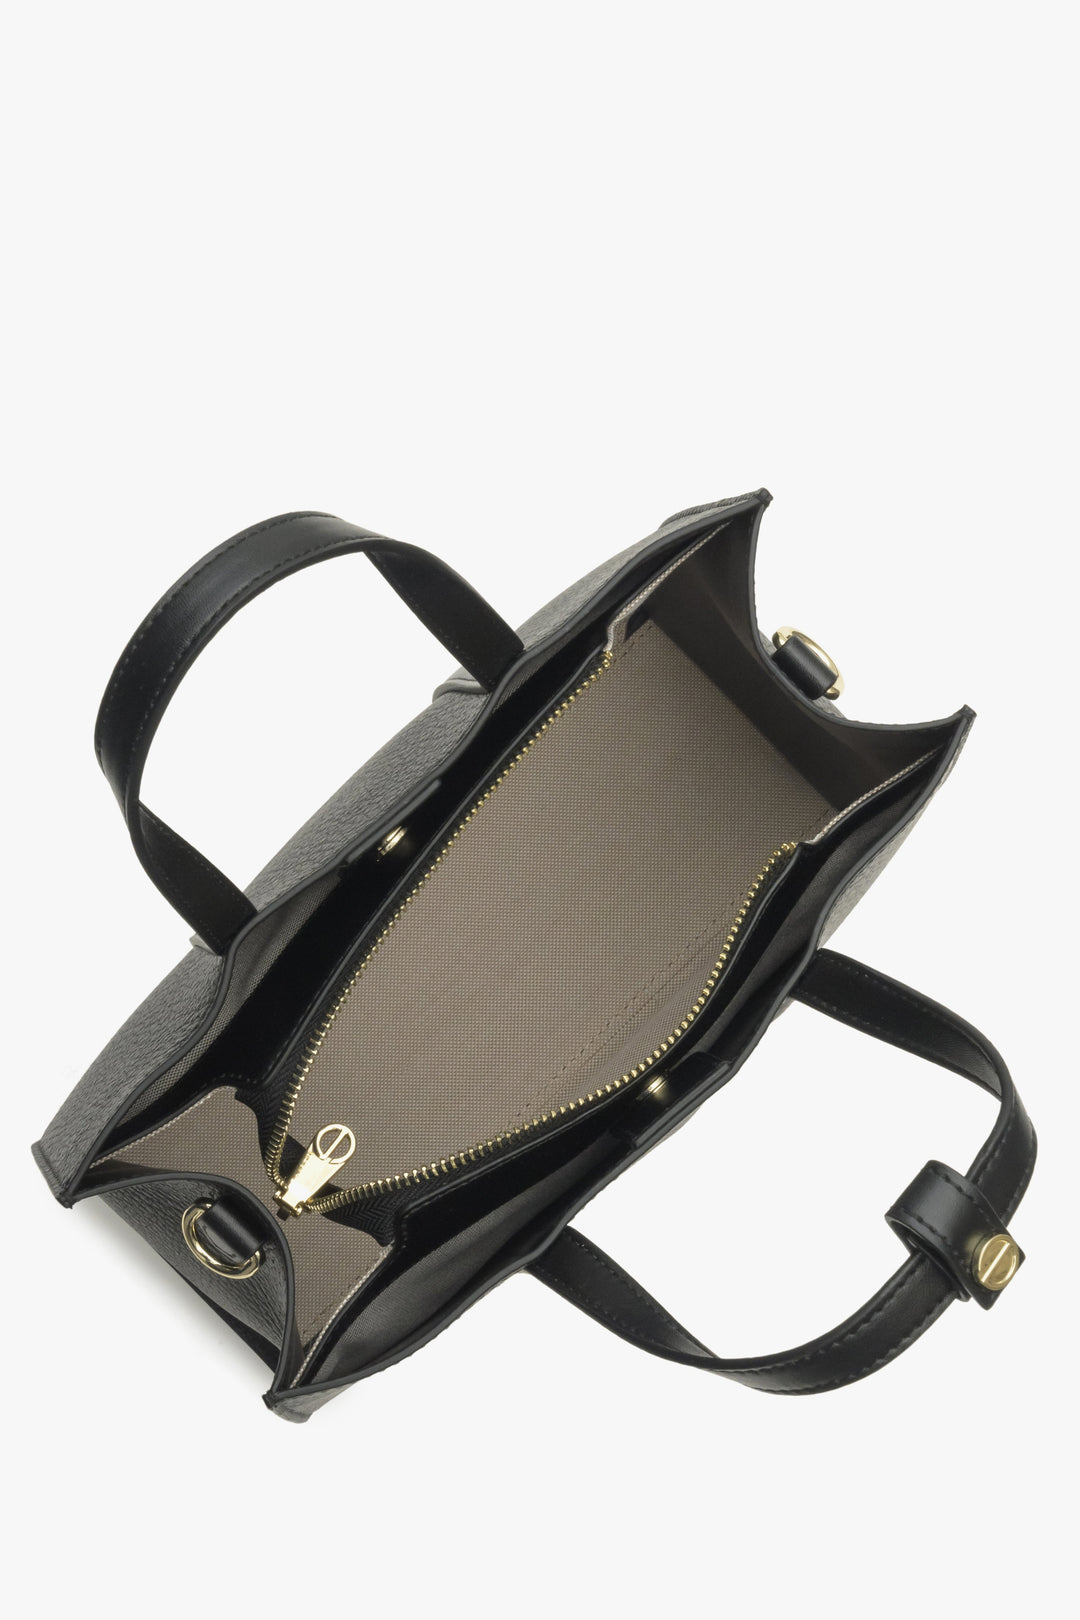 Women's black leather shopper bag by Estro - interior presentation of the model.